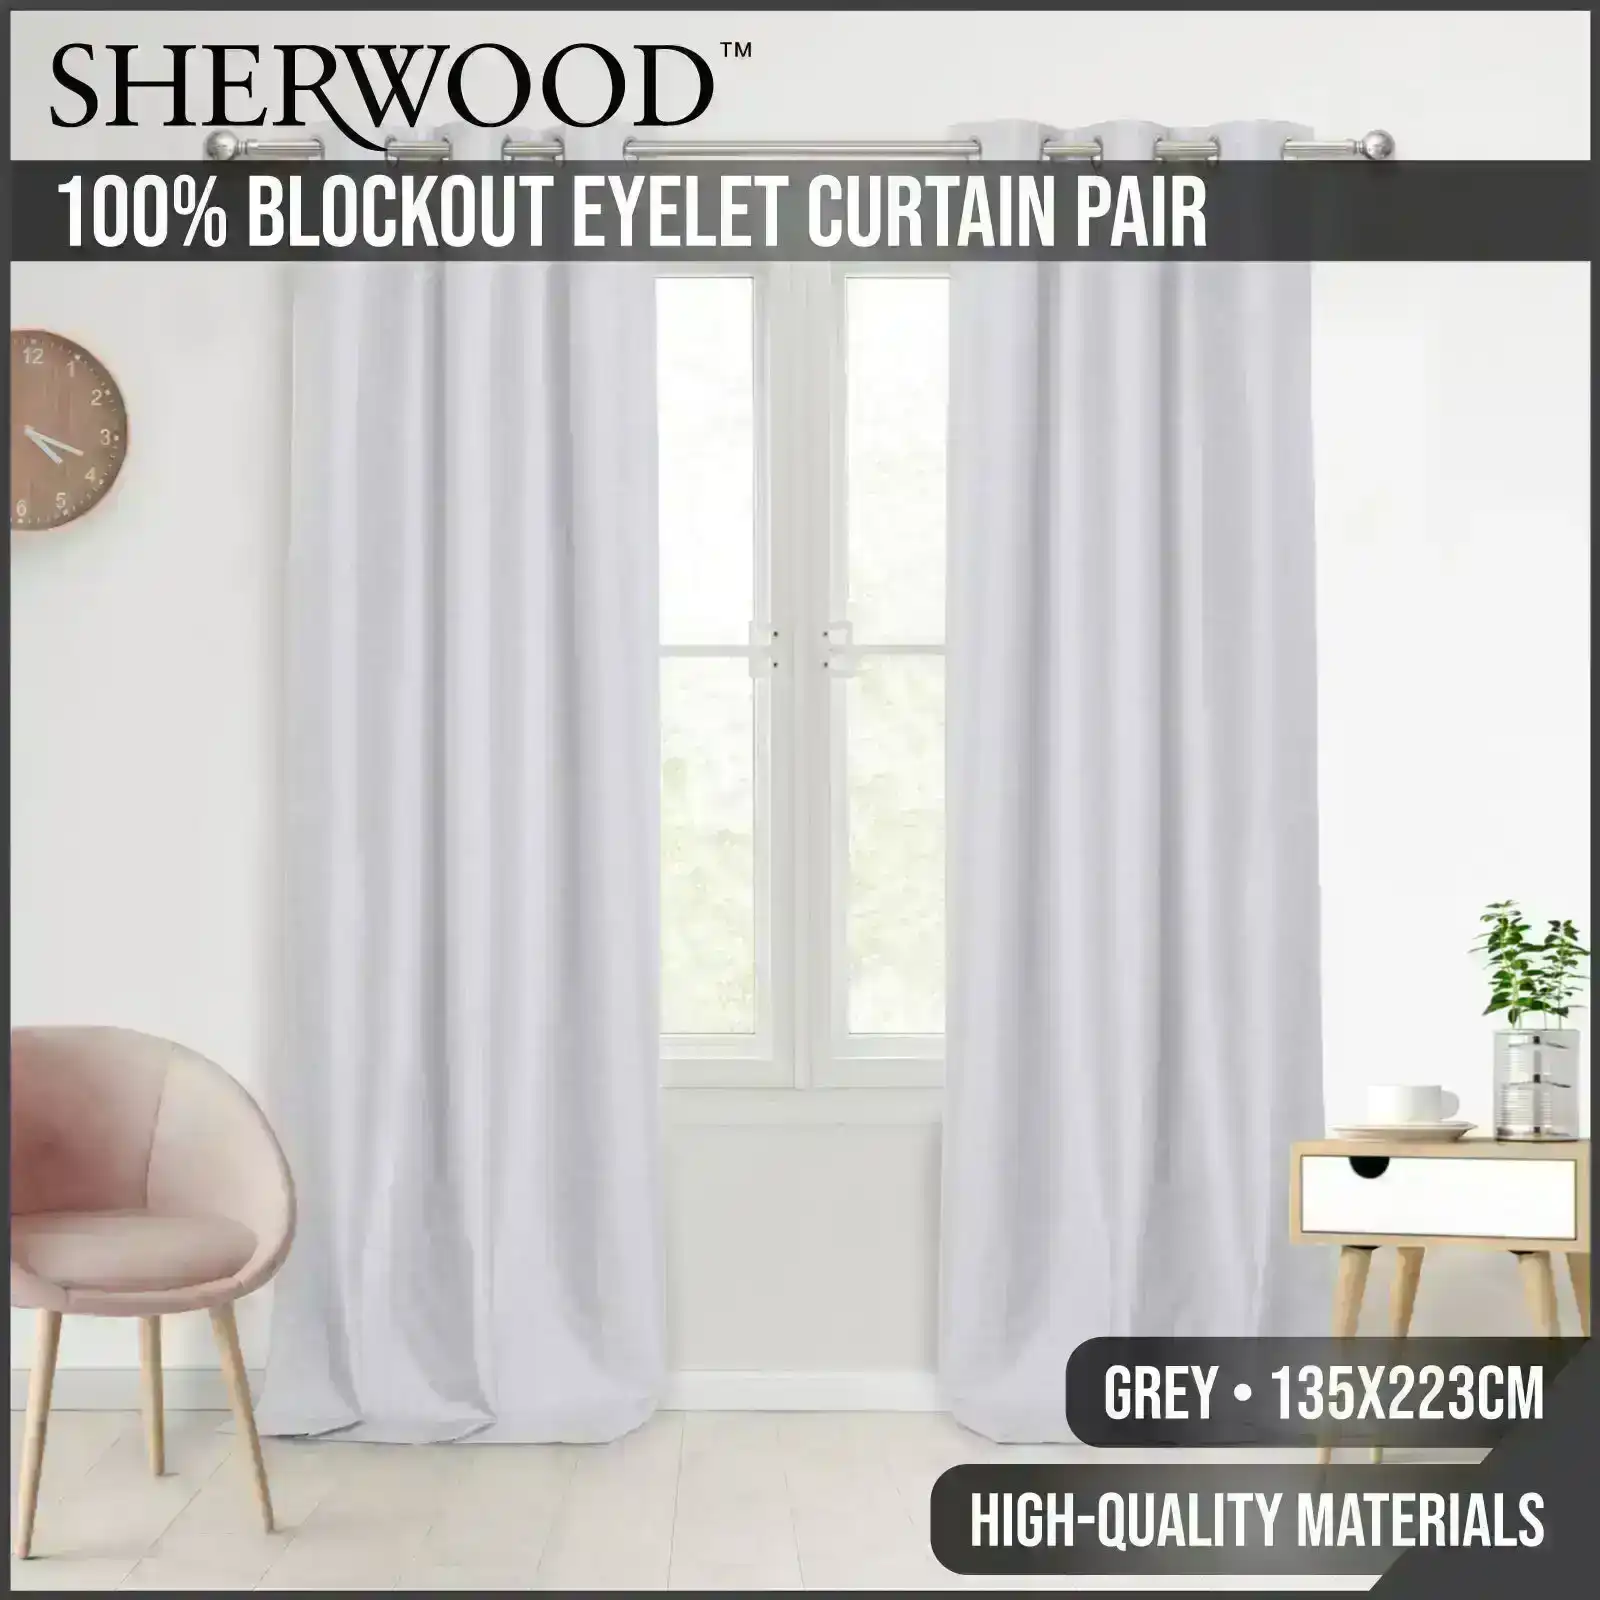 Sherwood Home 100% Blockout Eyelet Curtain Pair Grey 135x223cm